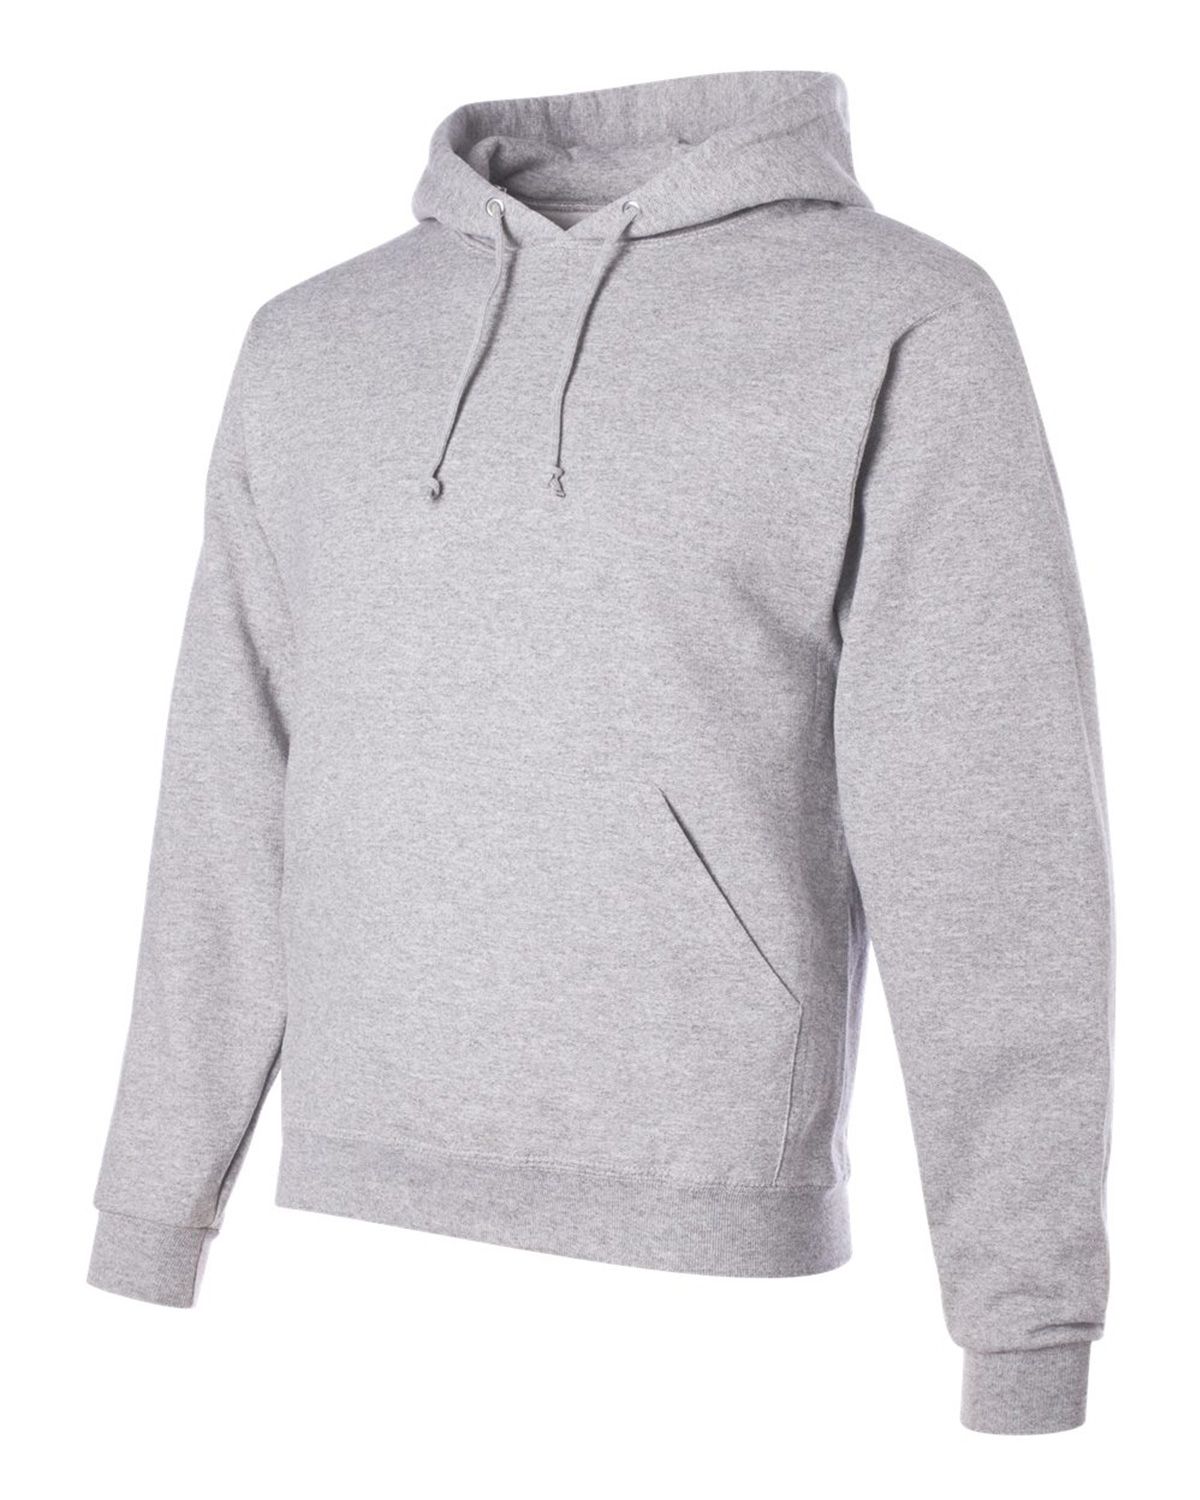 Reviews about Jerzees 996MR NuBlend Hooded Sweatshirt